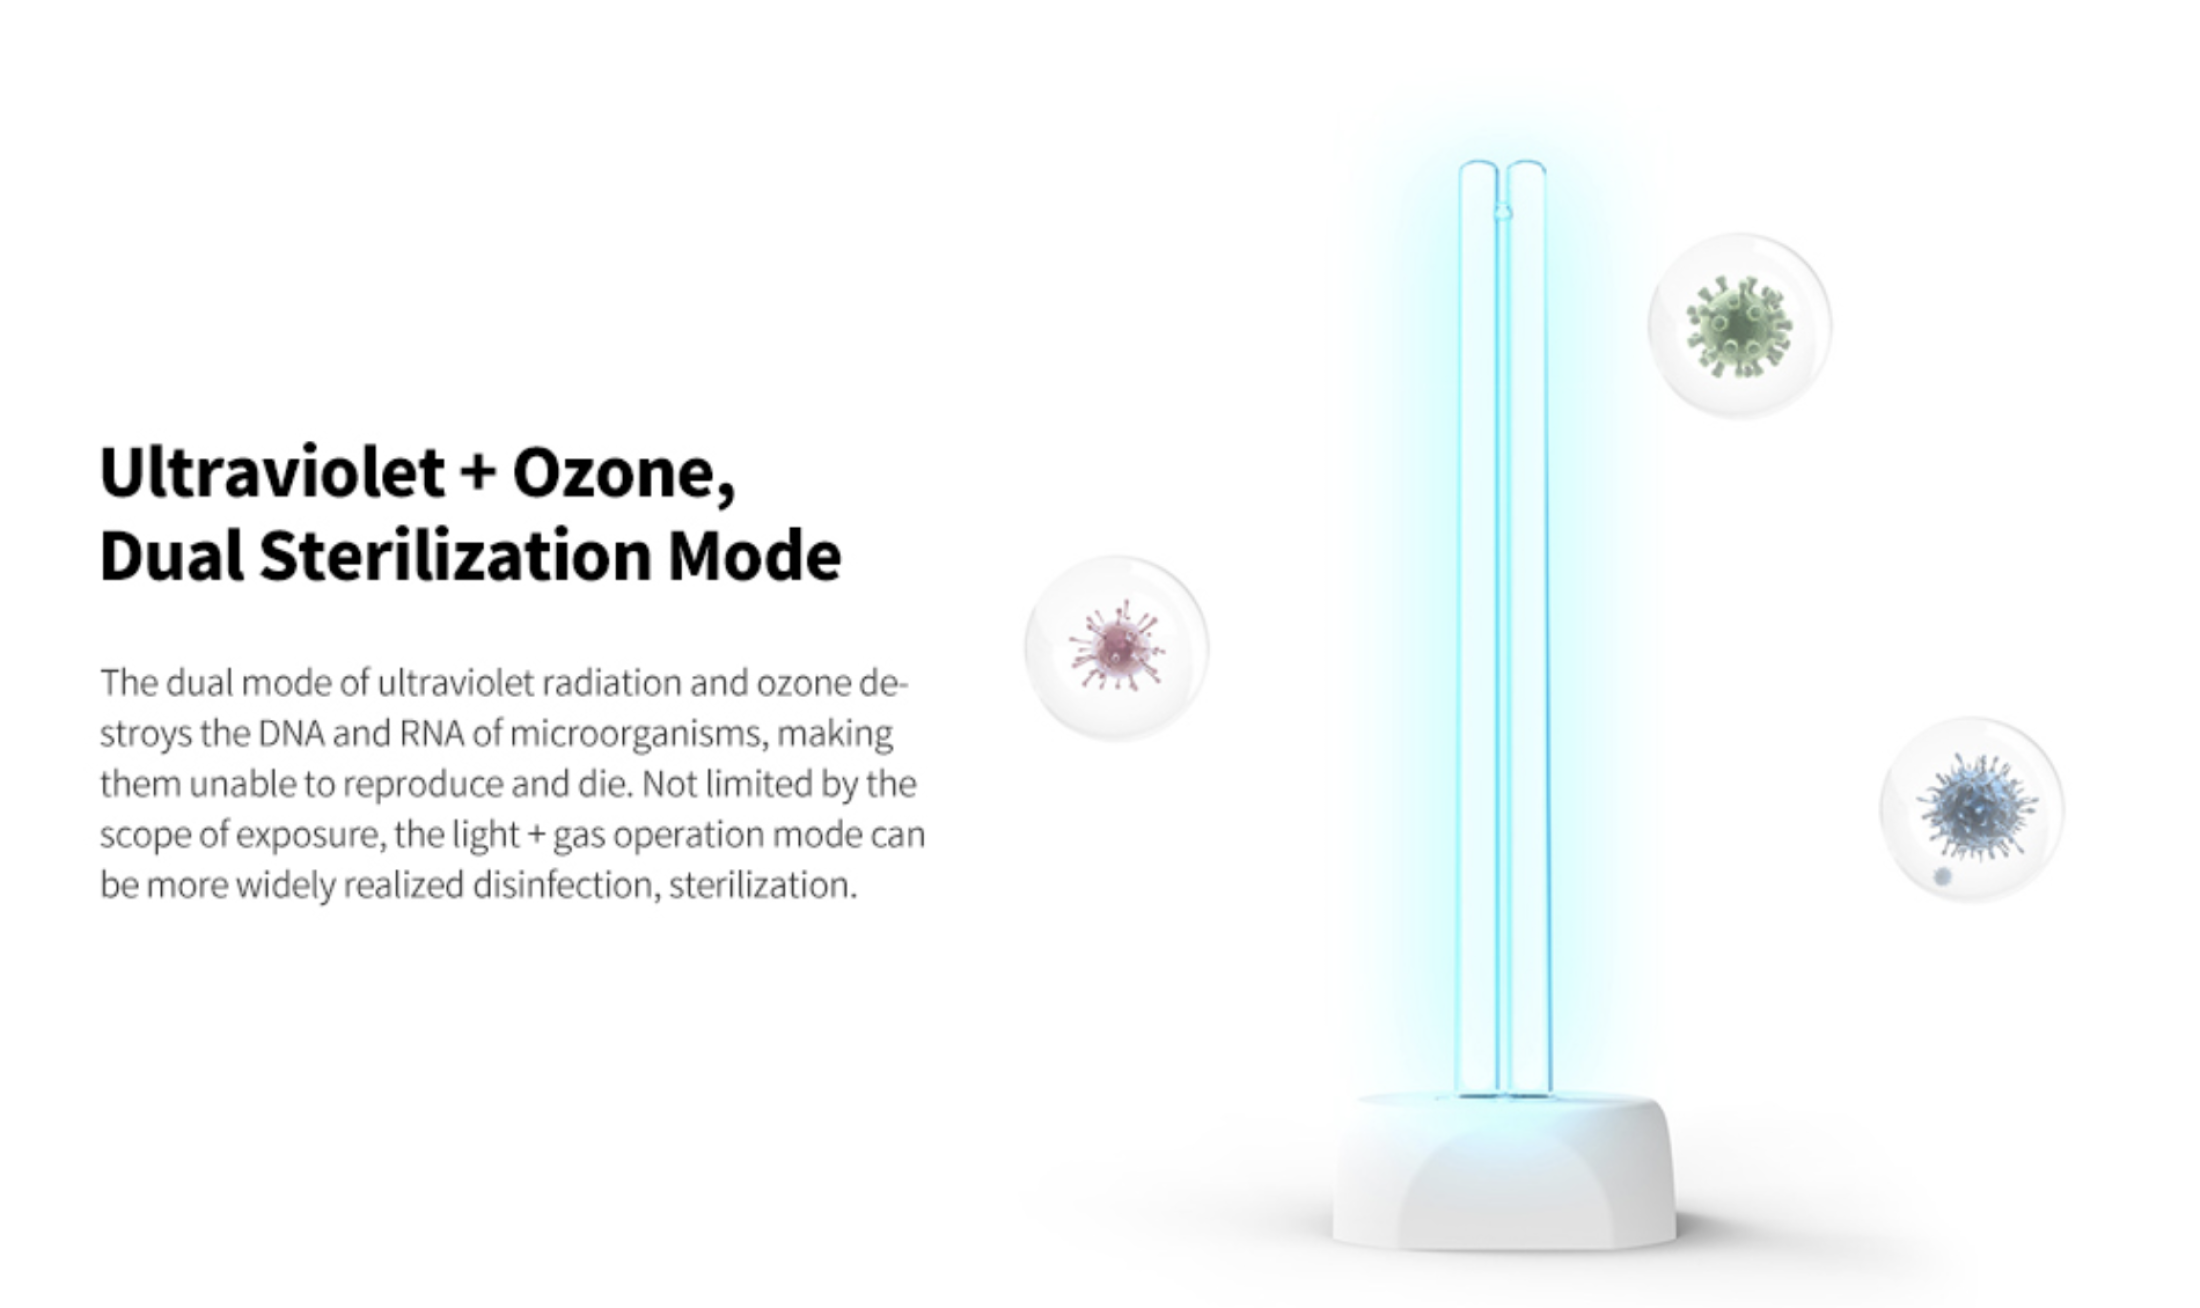 Xiaomi huayi mijia Household Disinfection Germicidal Lamp UV Ozone Sterilization Light 38W 360